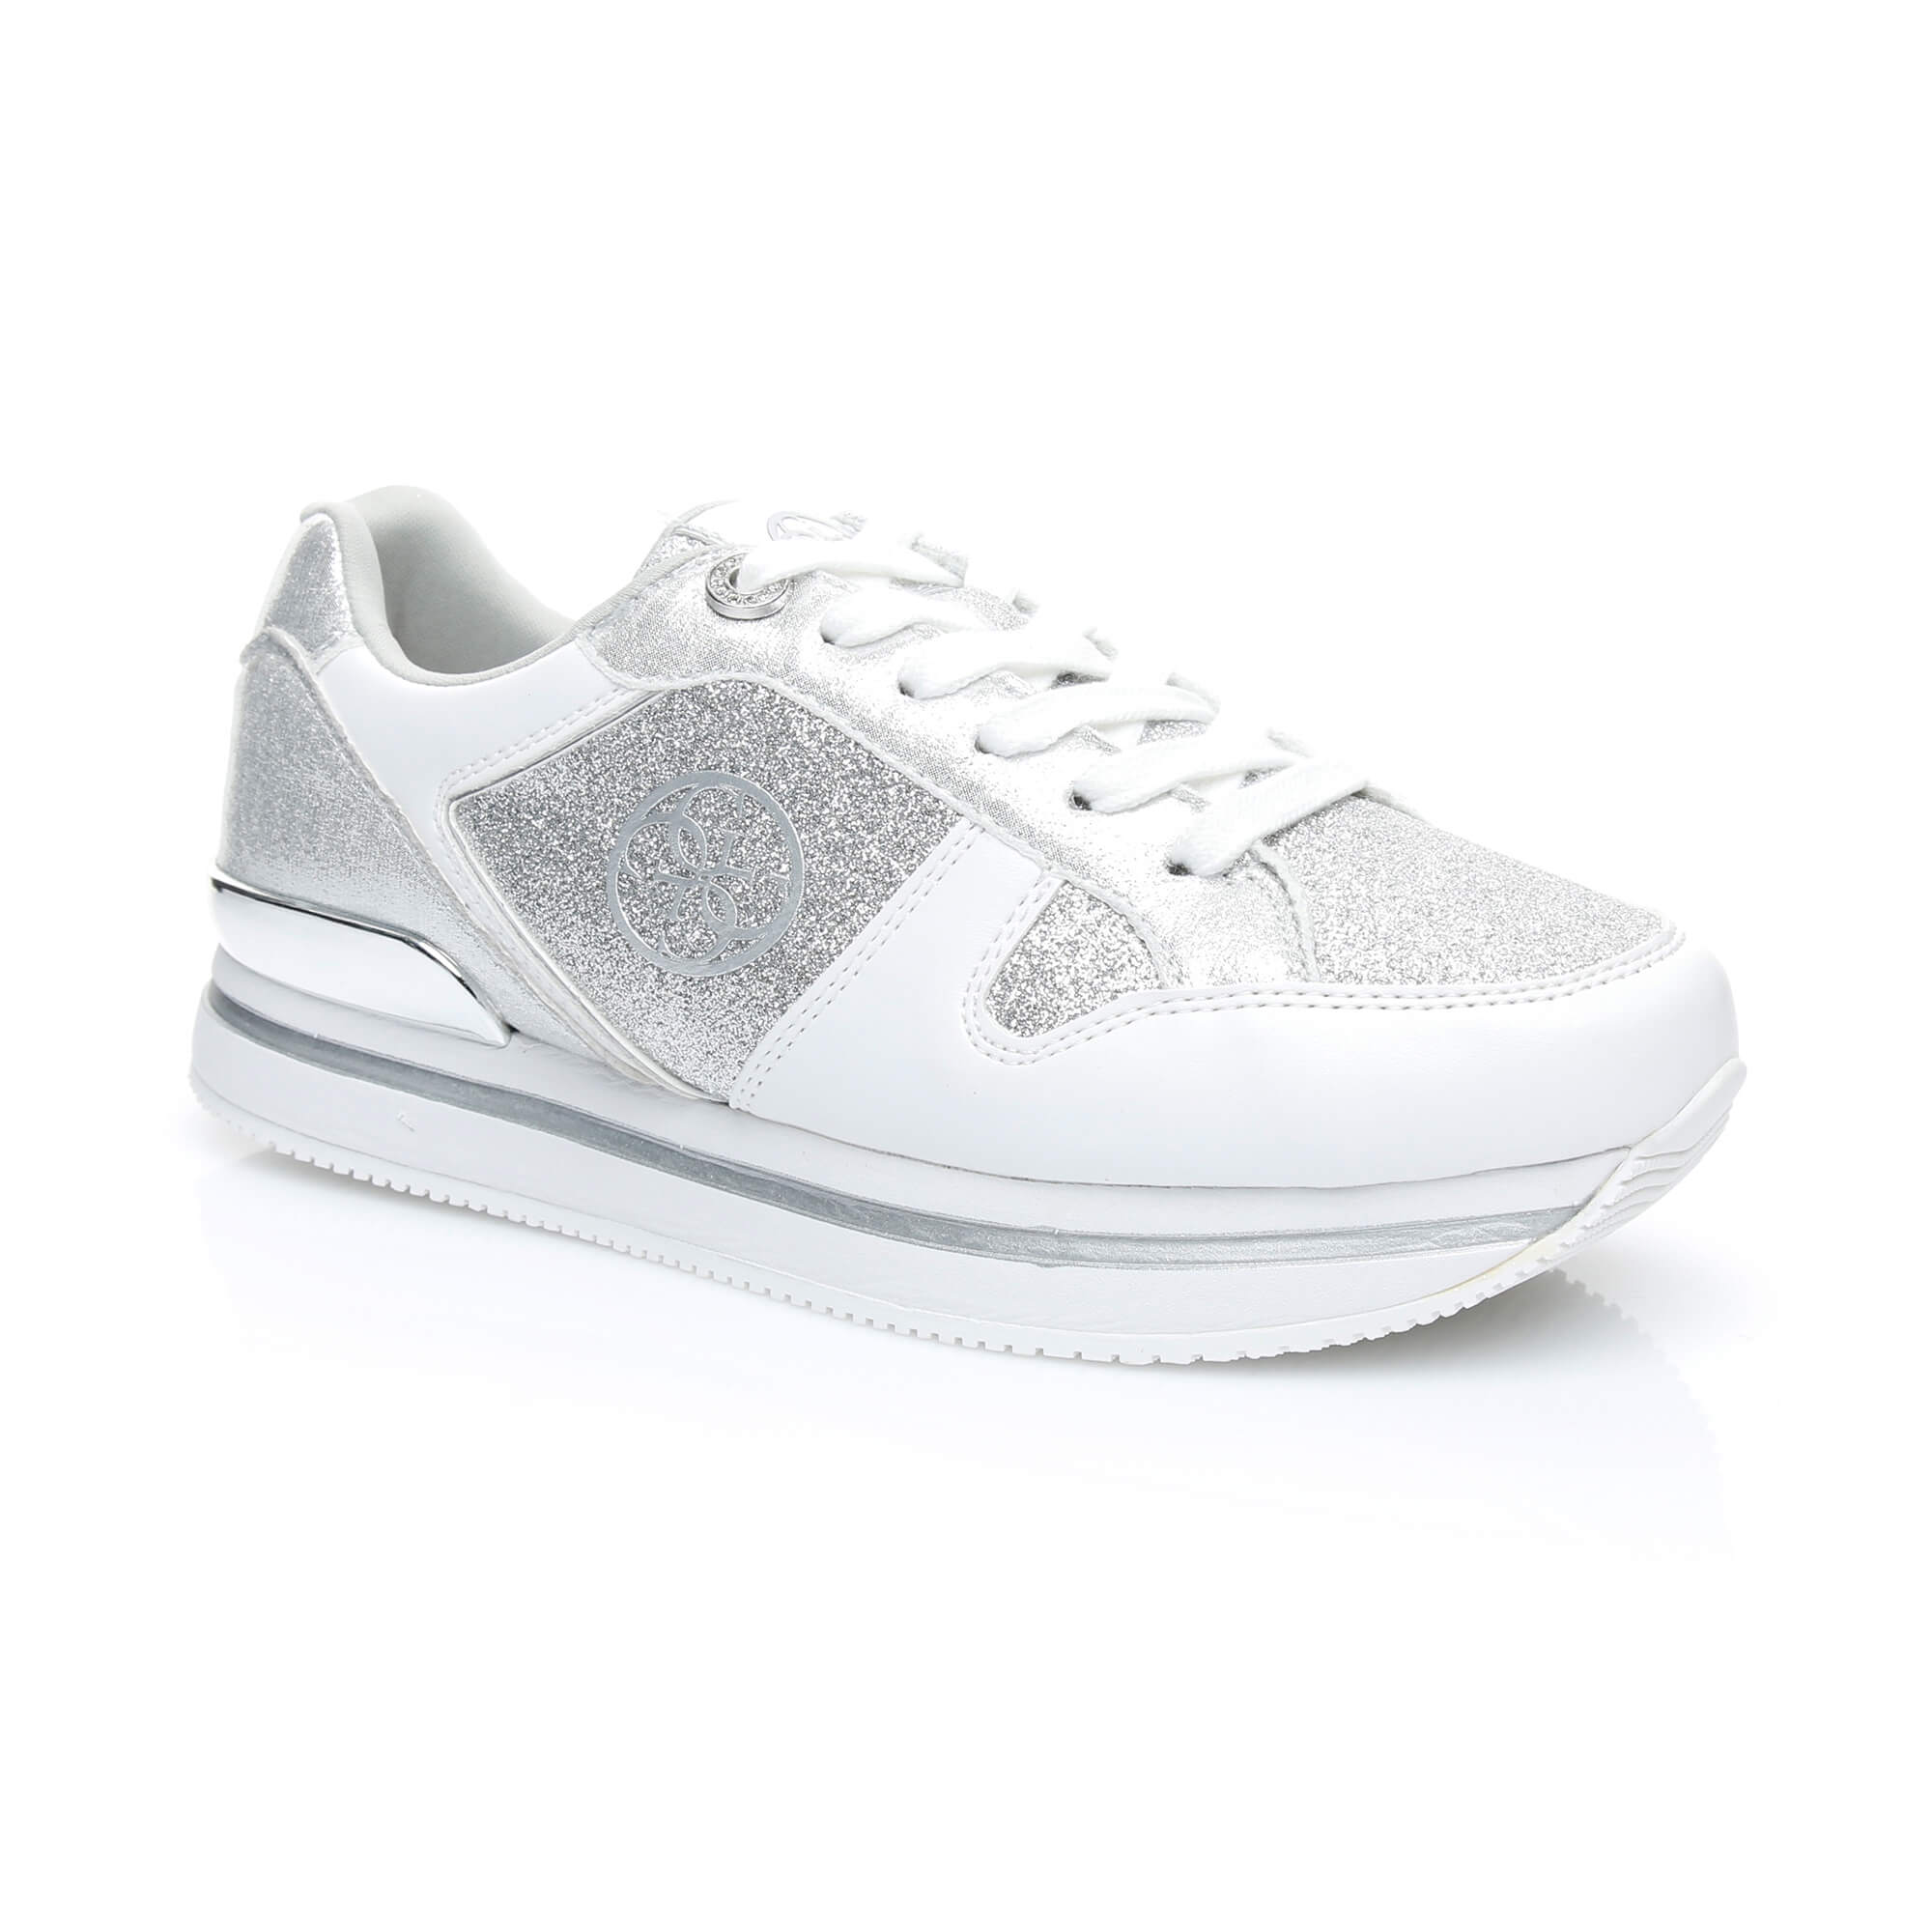 Guess Dameon Kadın Gümüş Sneaker